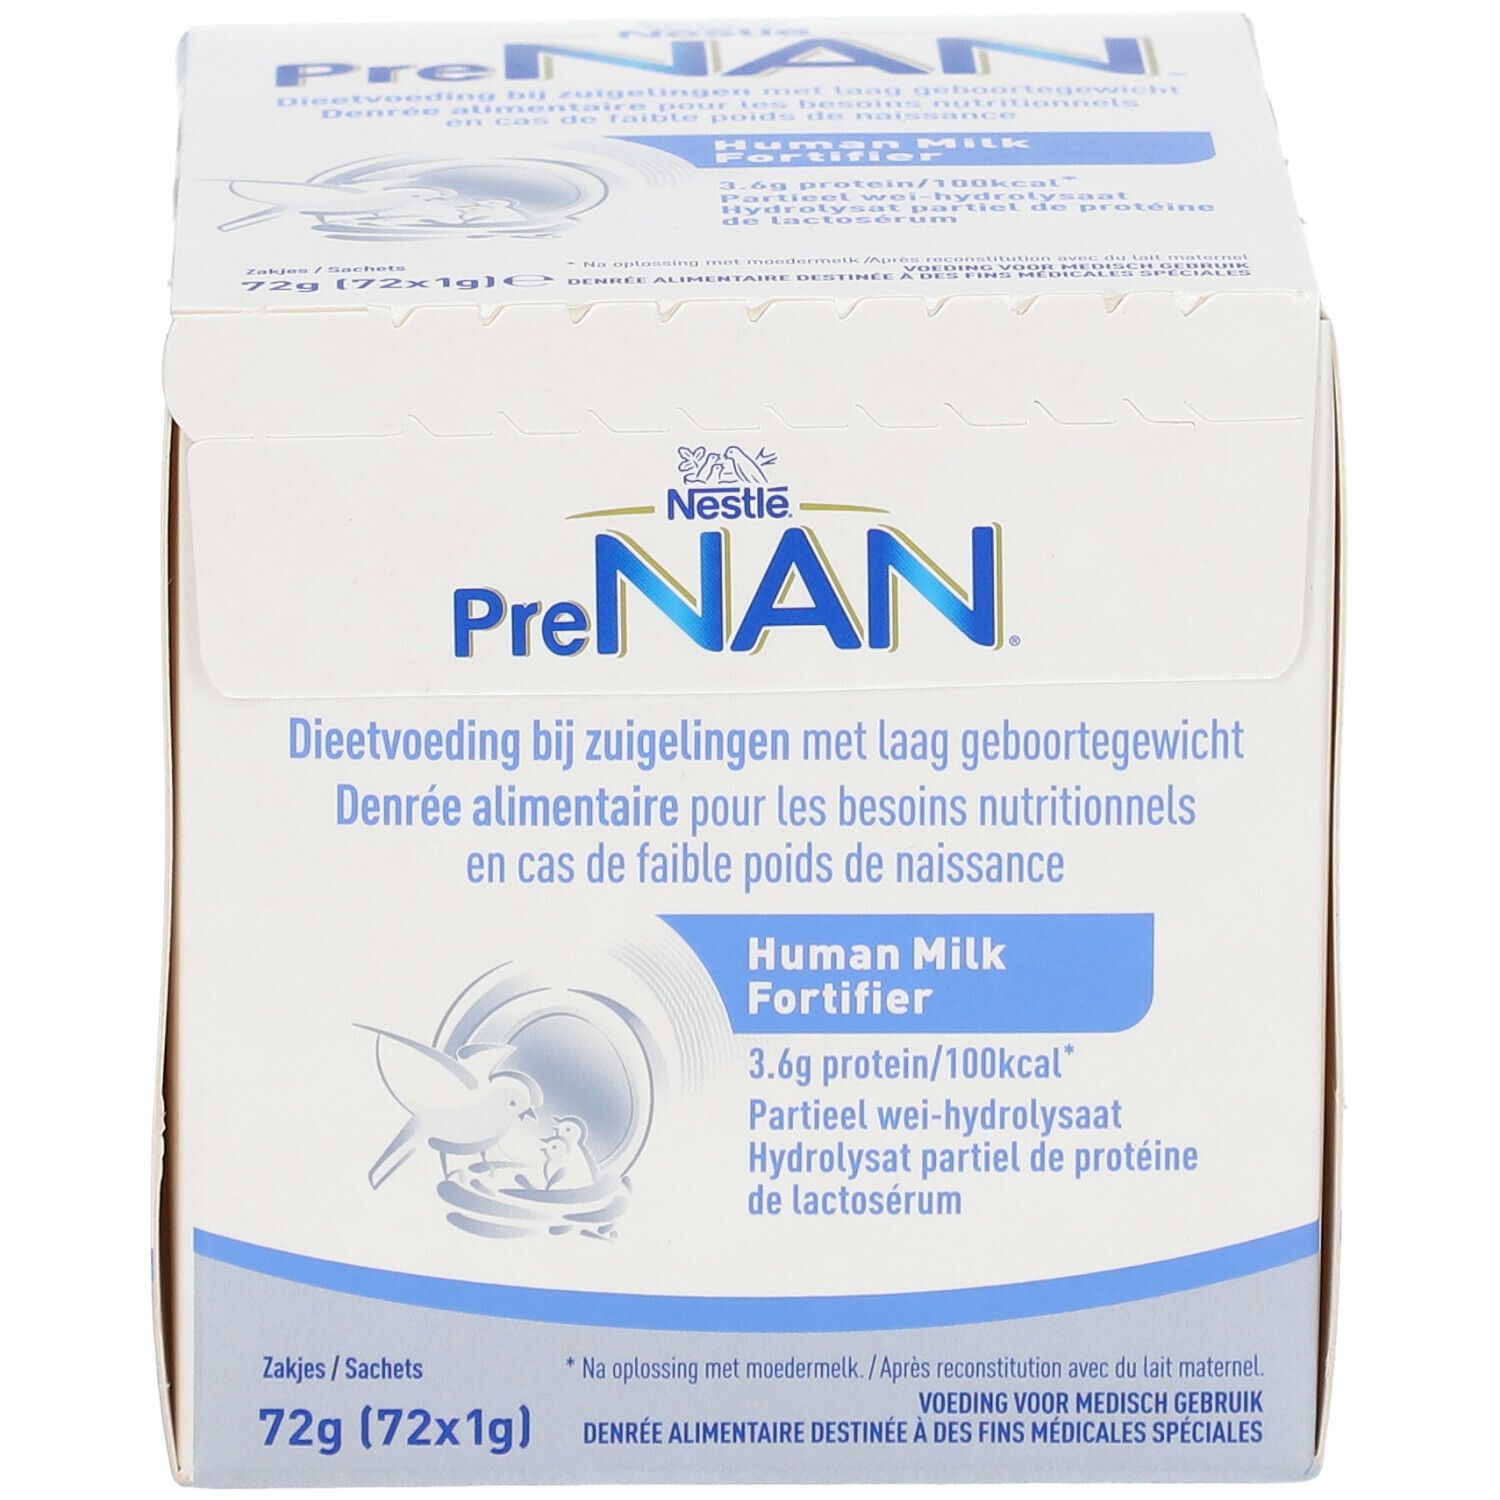 Nestlé® PreNAN Human Milk Fortifier